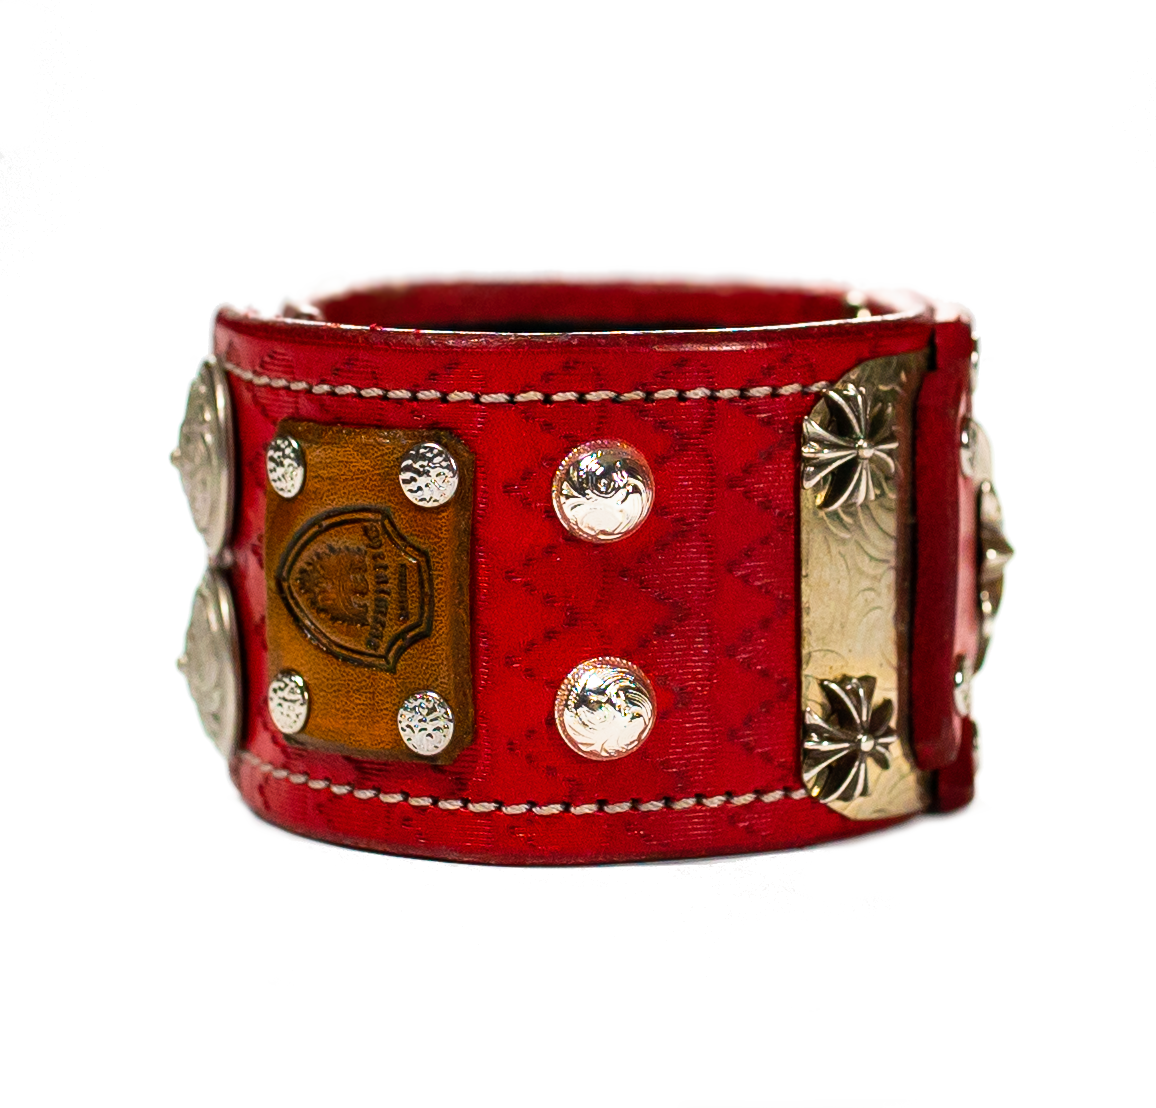 Sir Charles - Red on Red Leather Bracelet label side